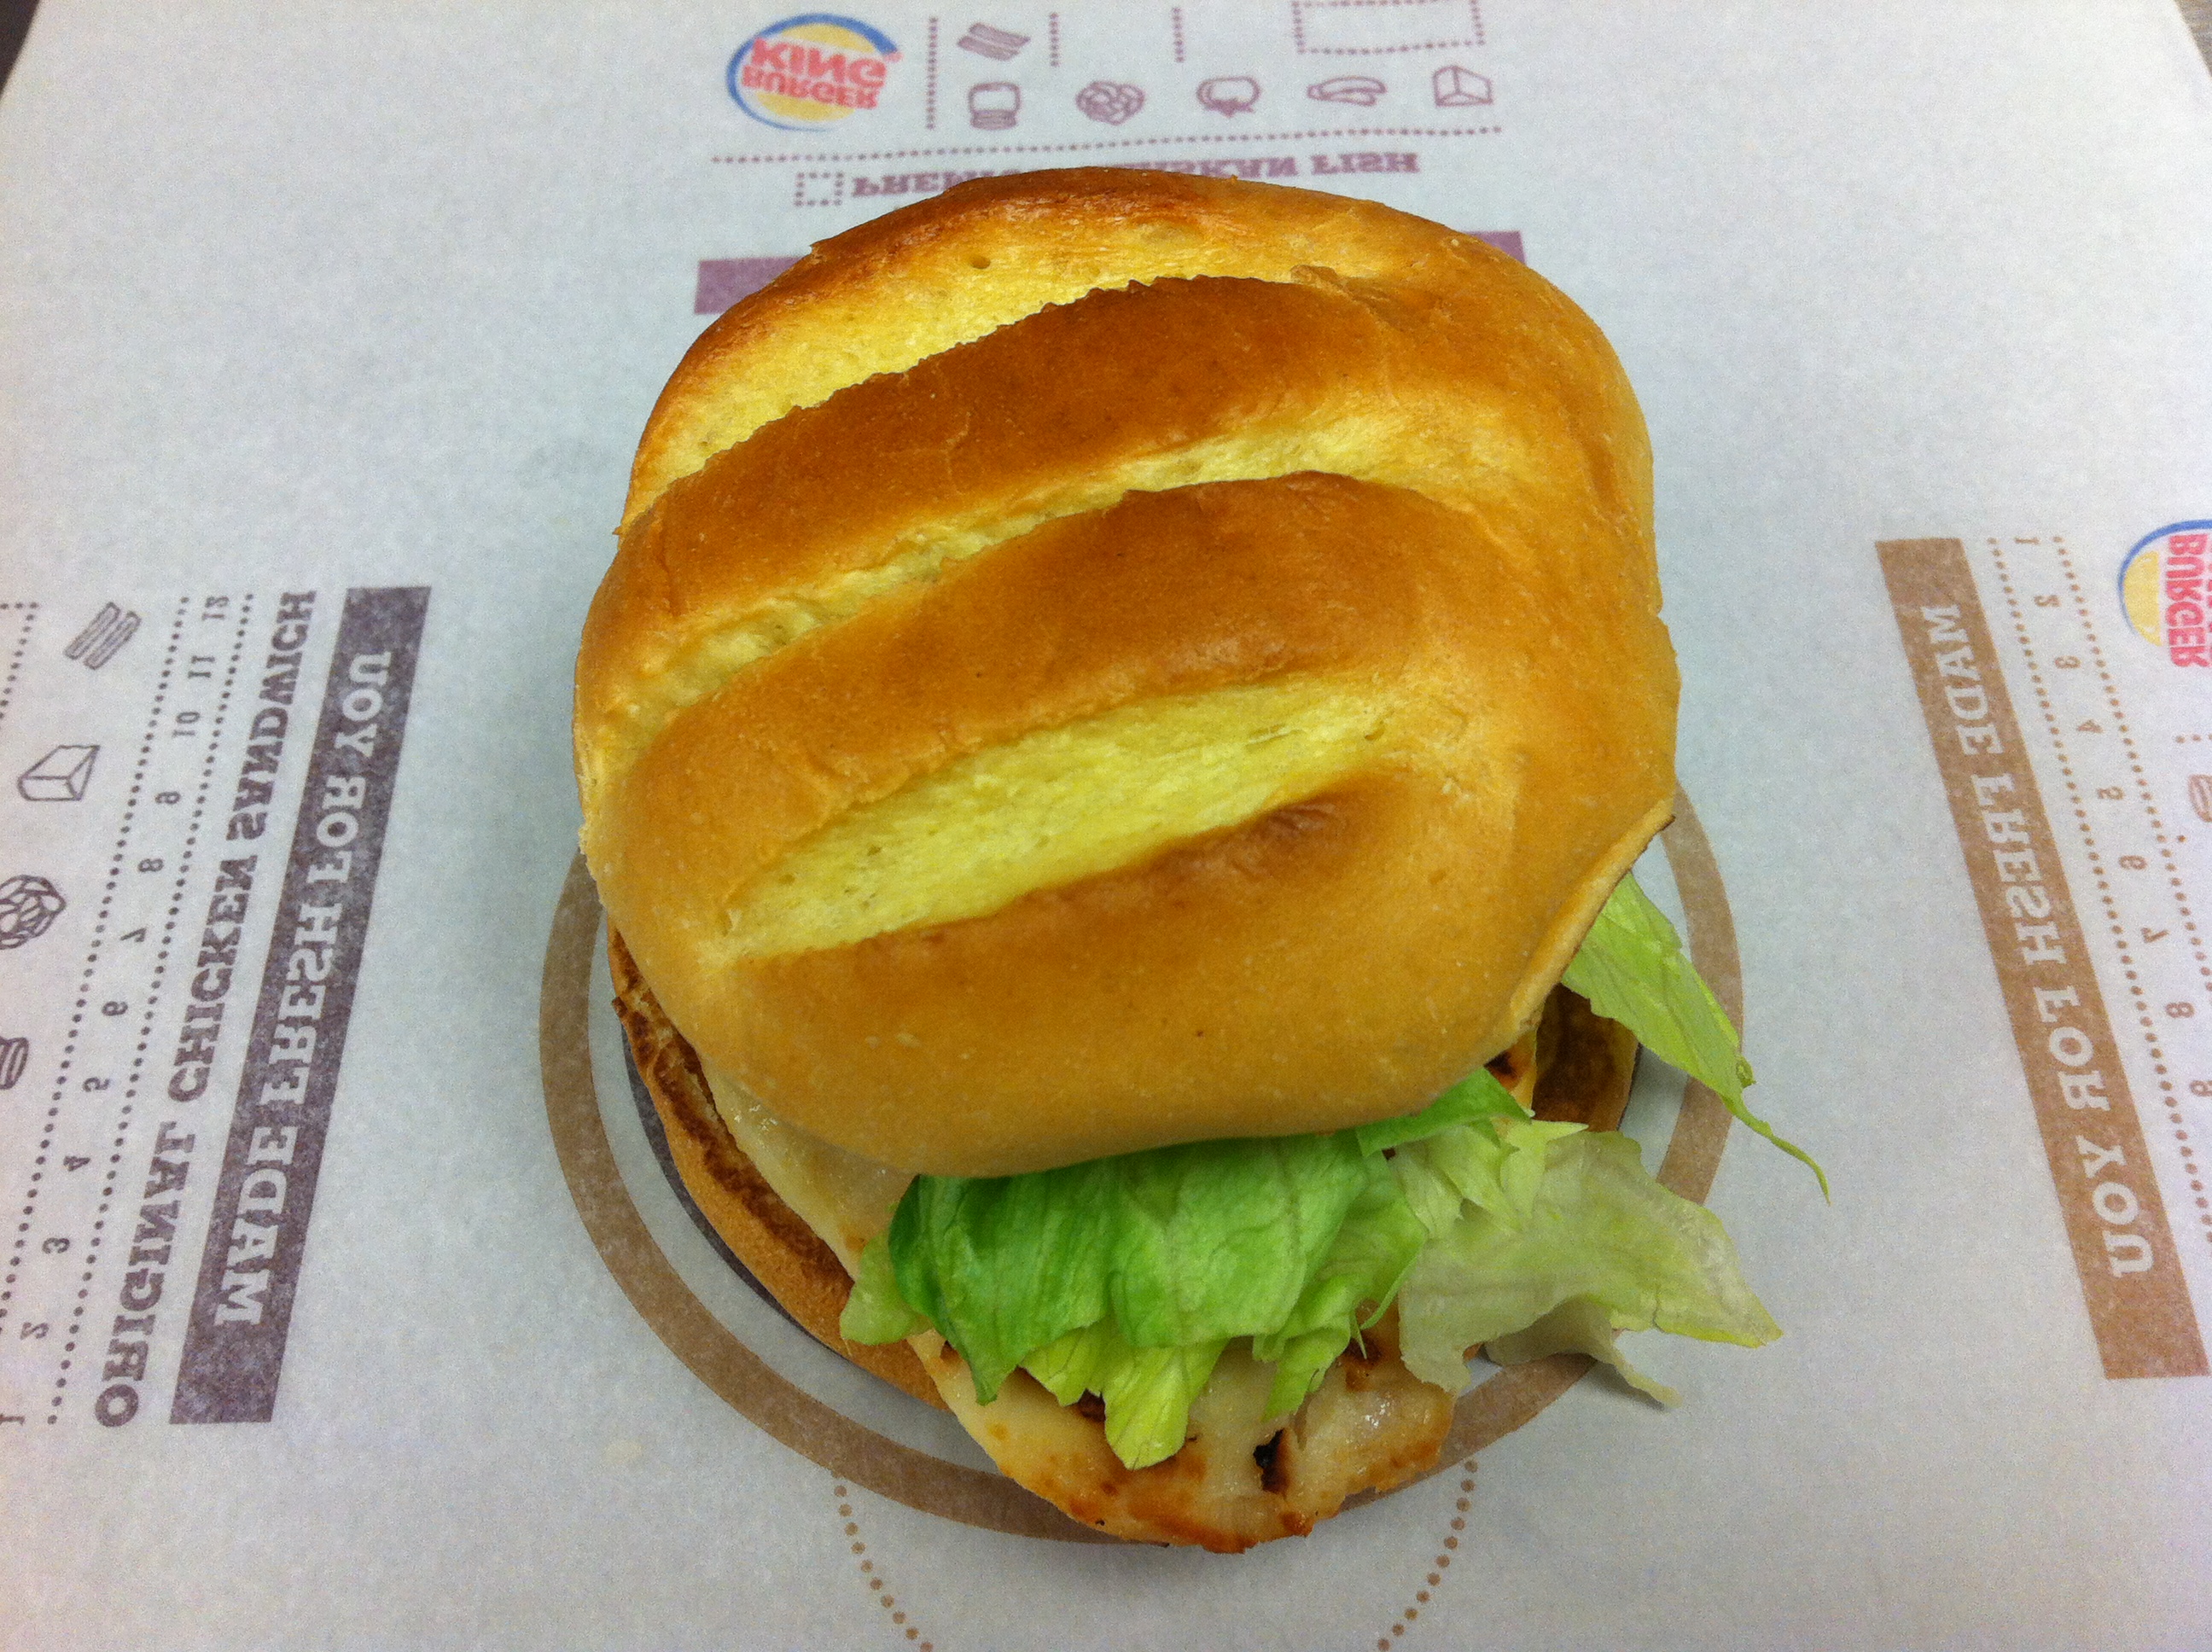 FAST FOOD NEWS: Burger King Extra Long Fish Sandwich - The Impulsive Buy